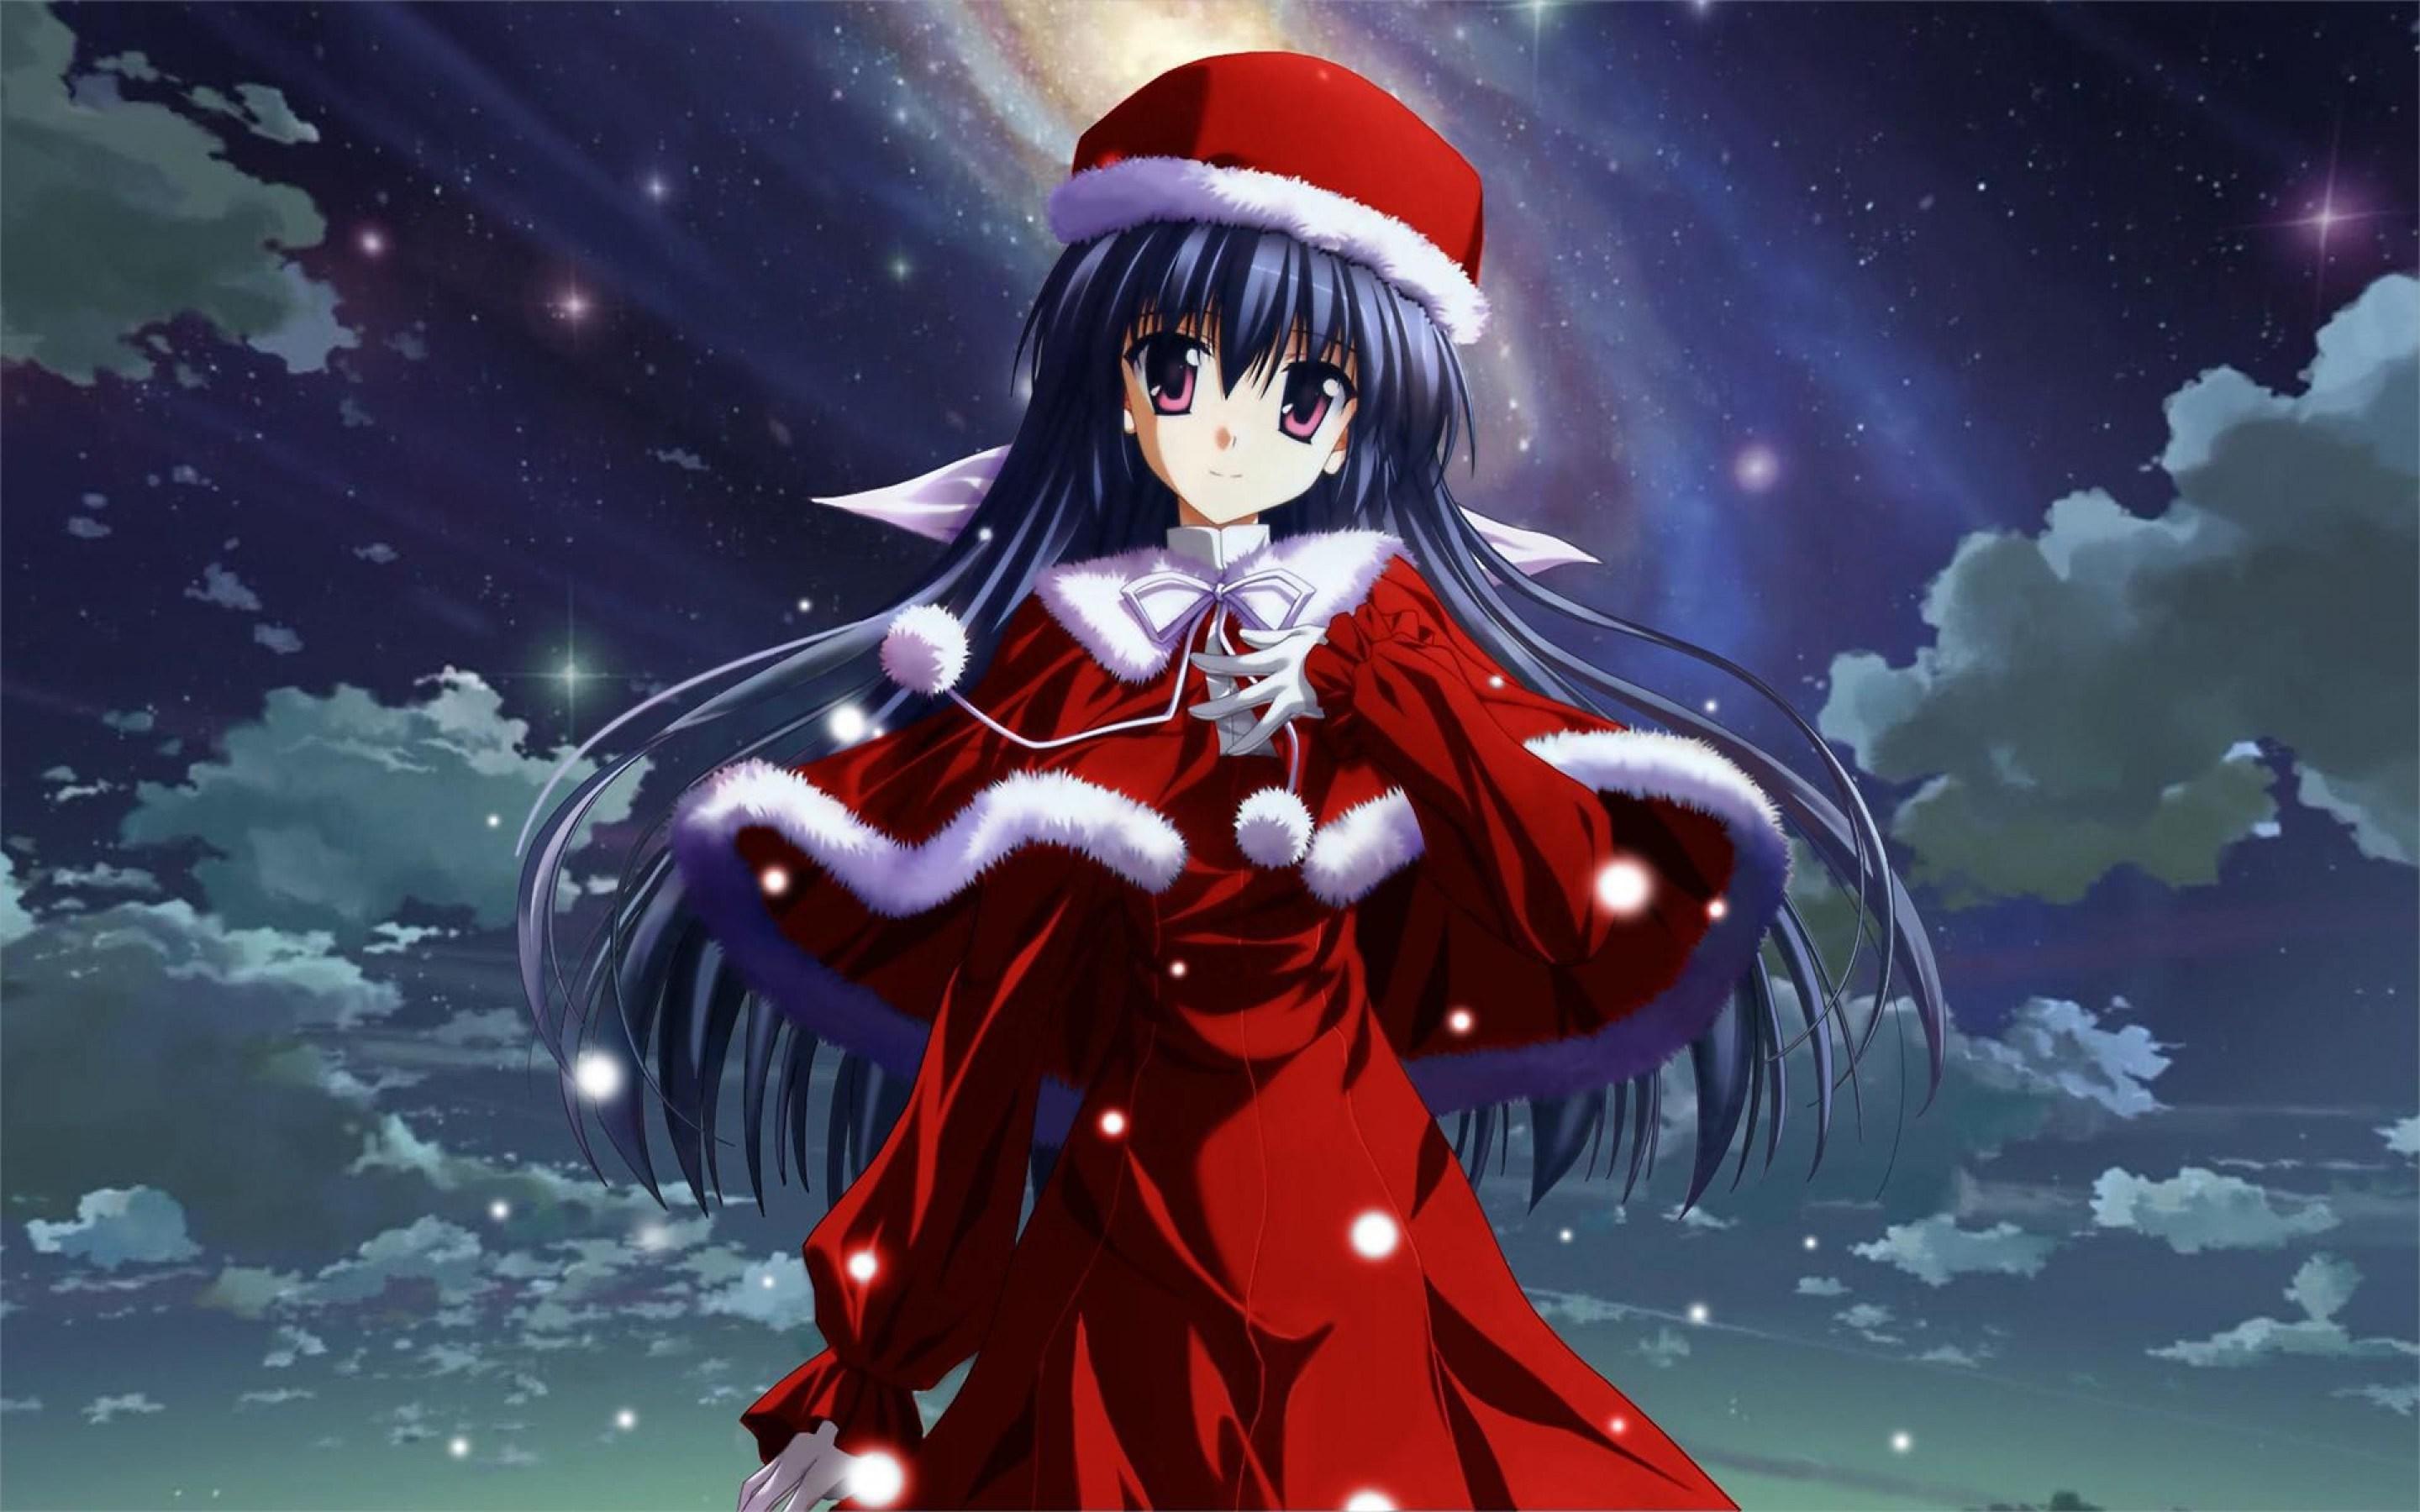 Merry Christmas Cute Anime Image Red Cute Anime Girl